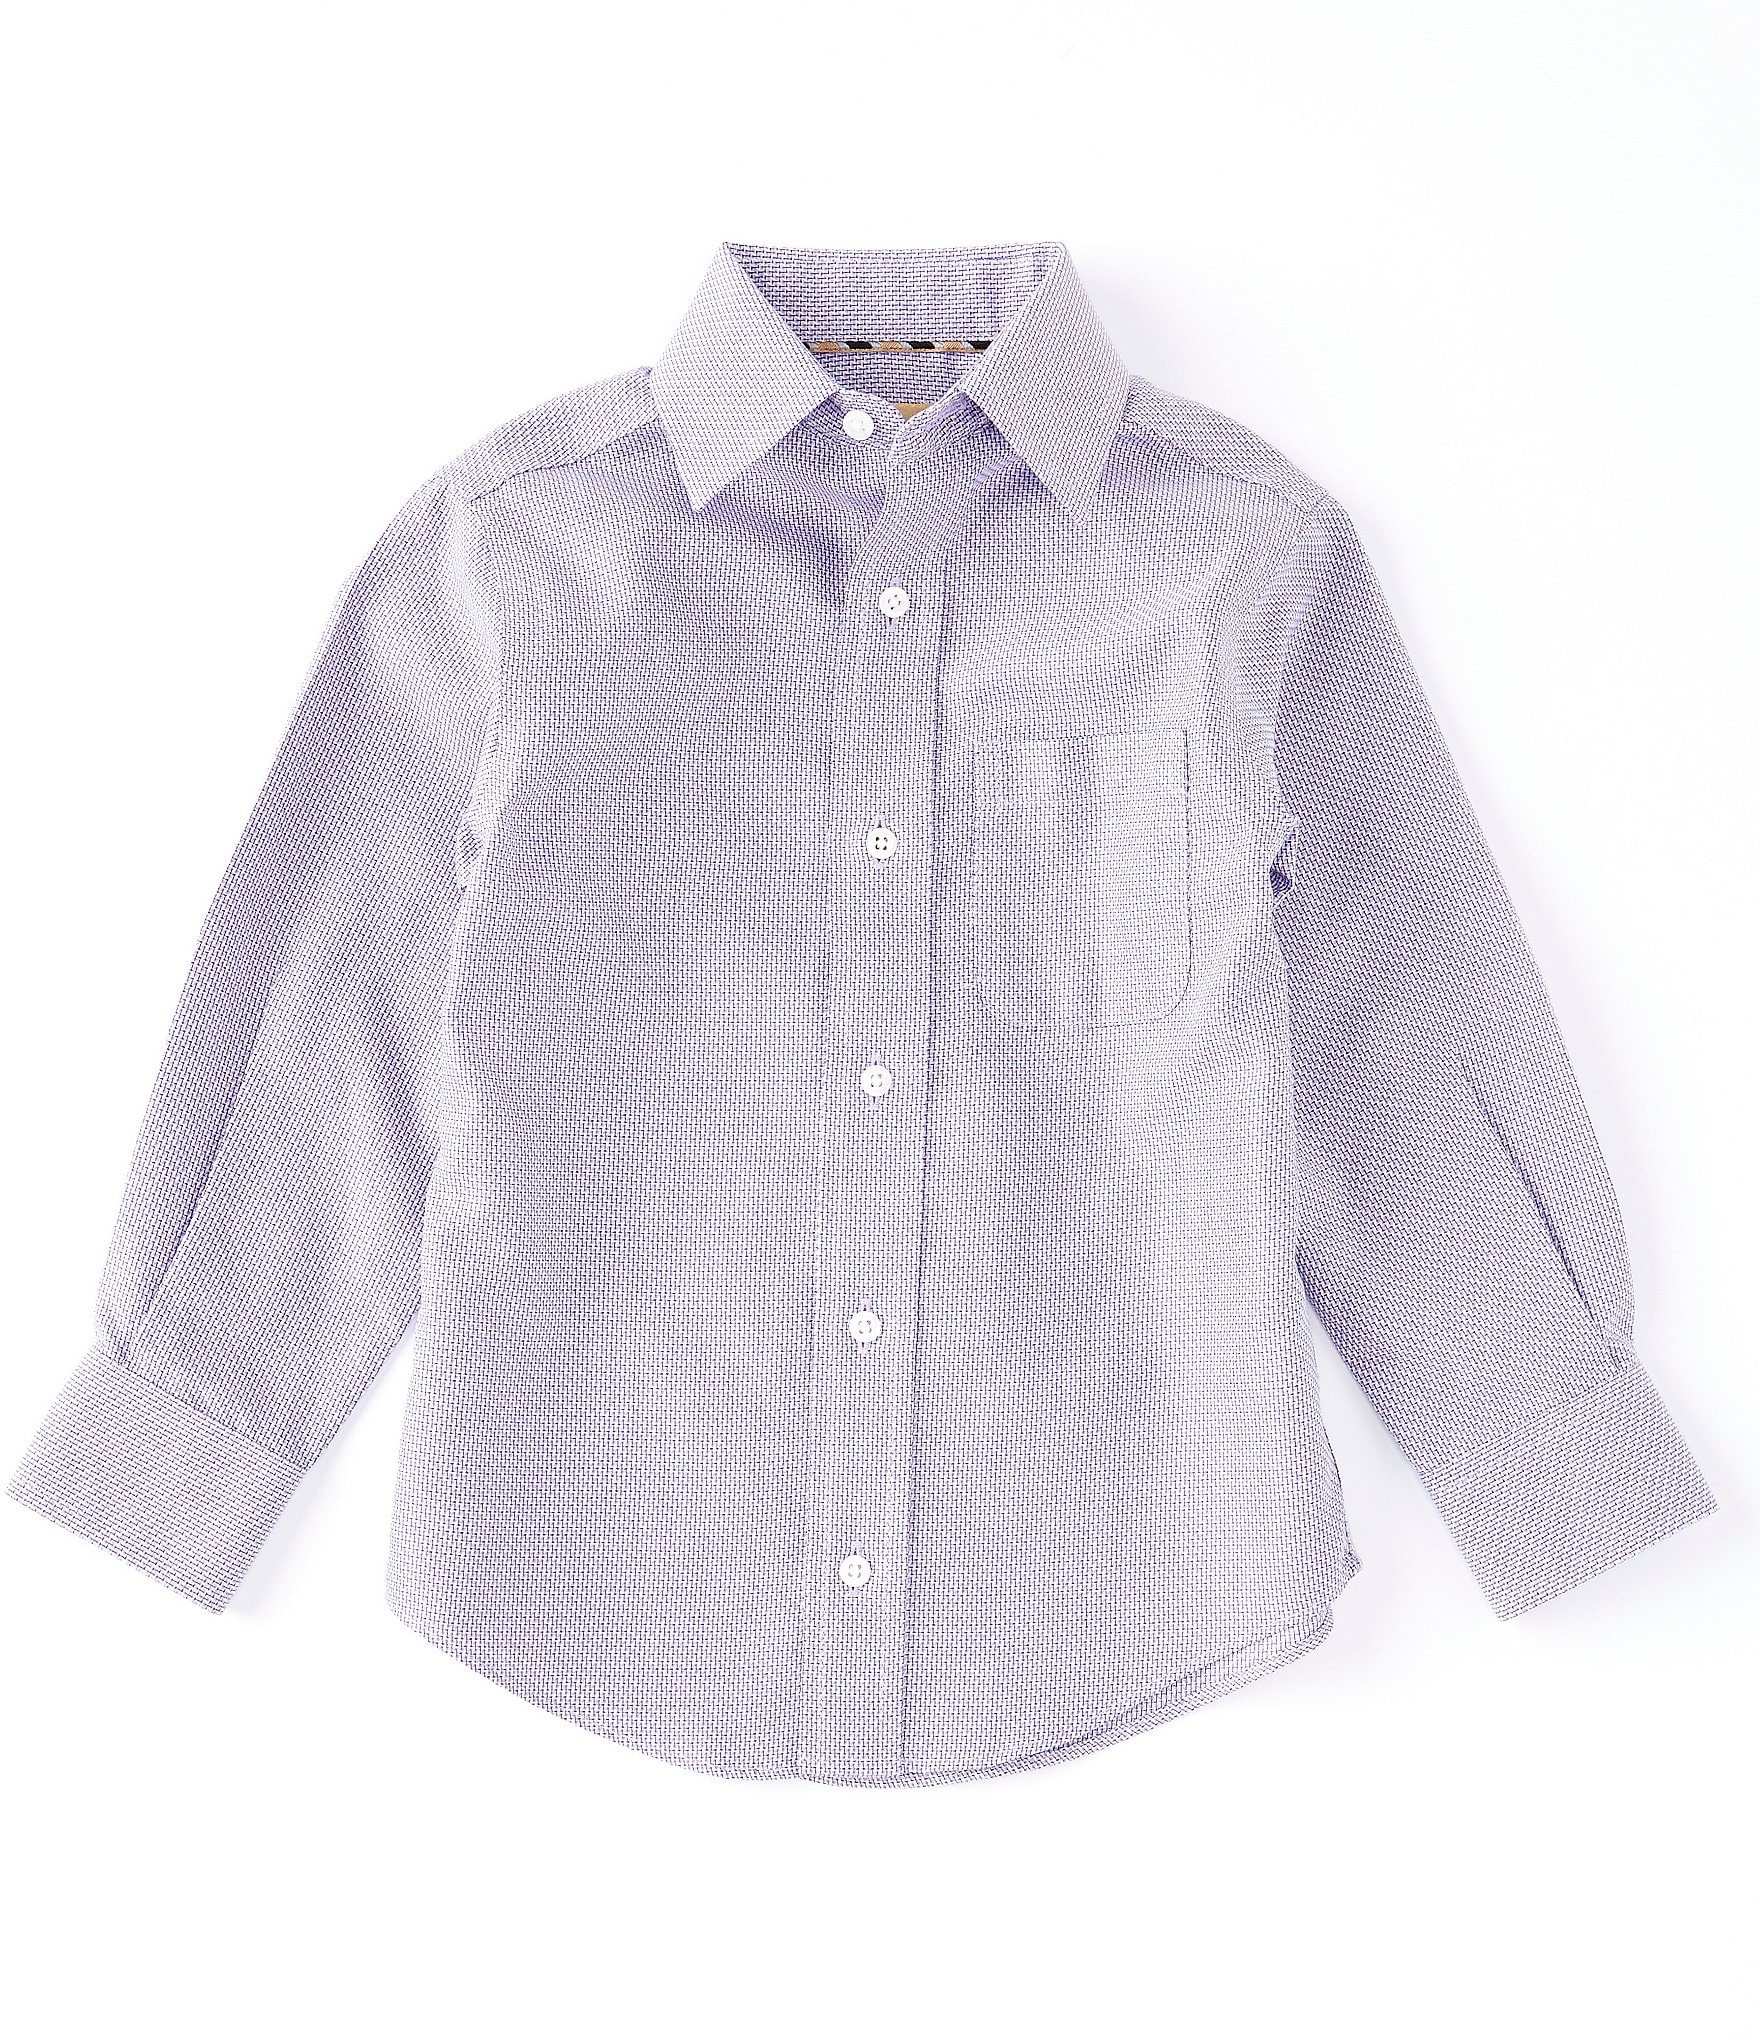 Buy > baby boy purple dress shirt > in stock